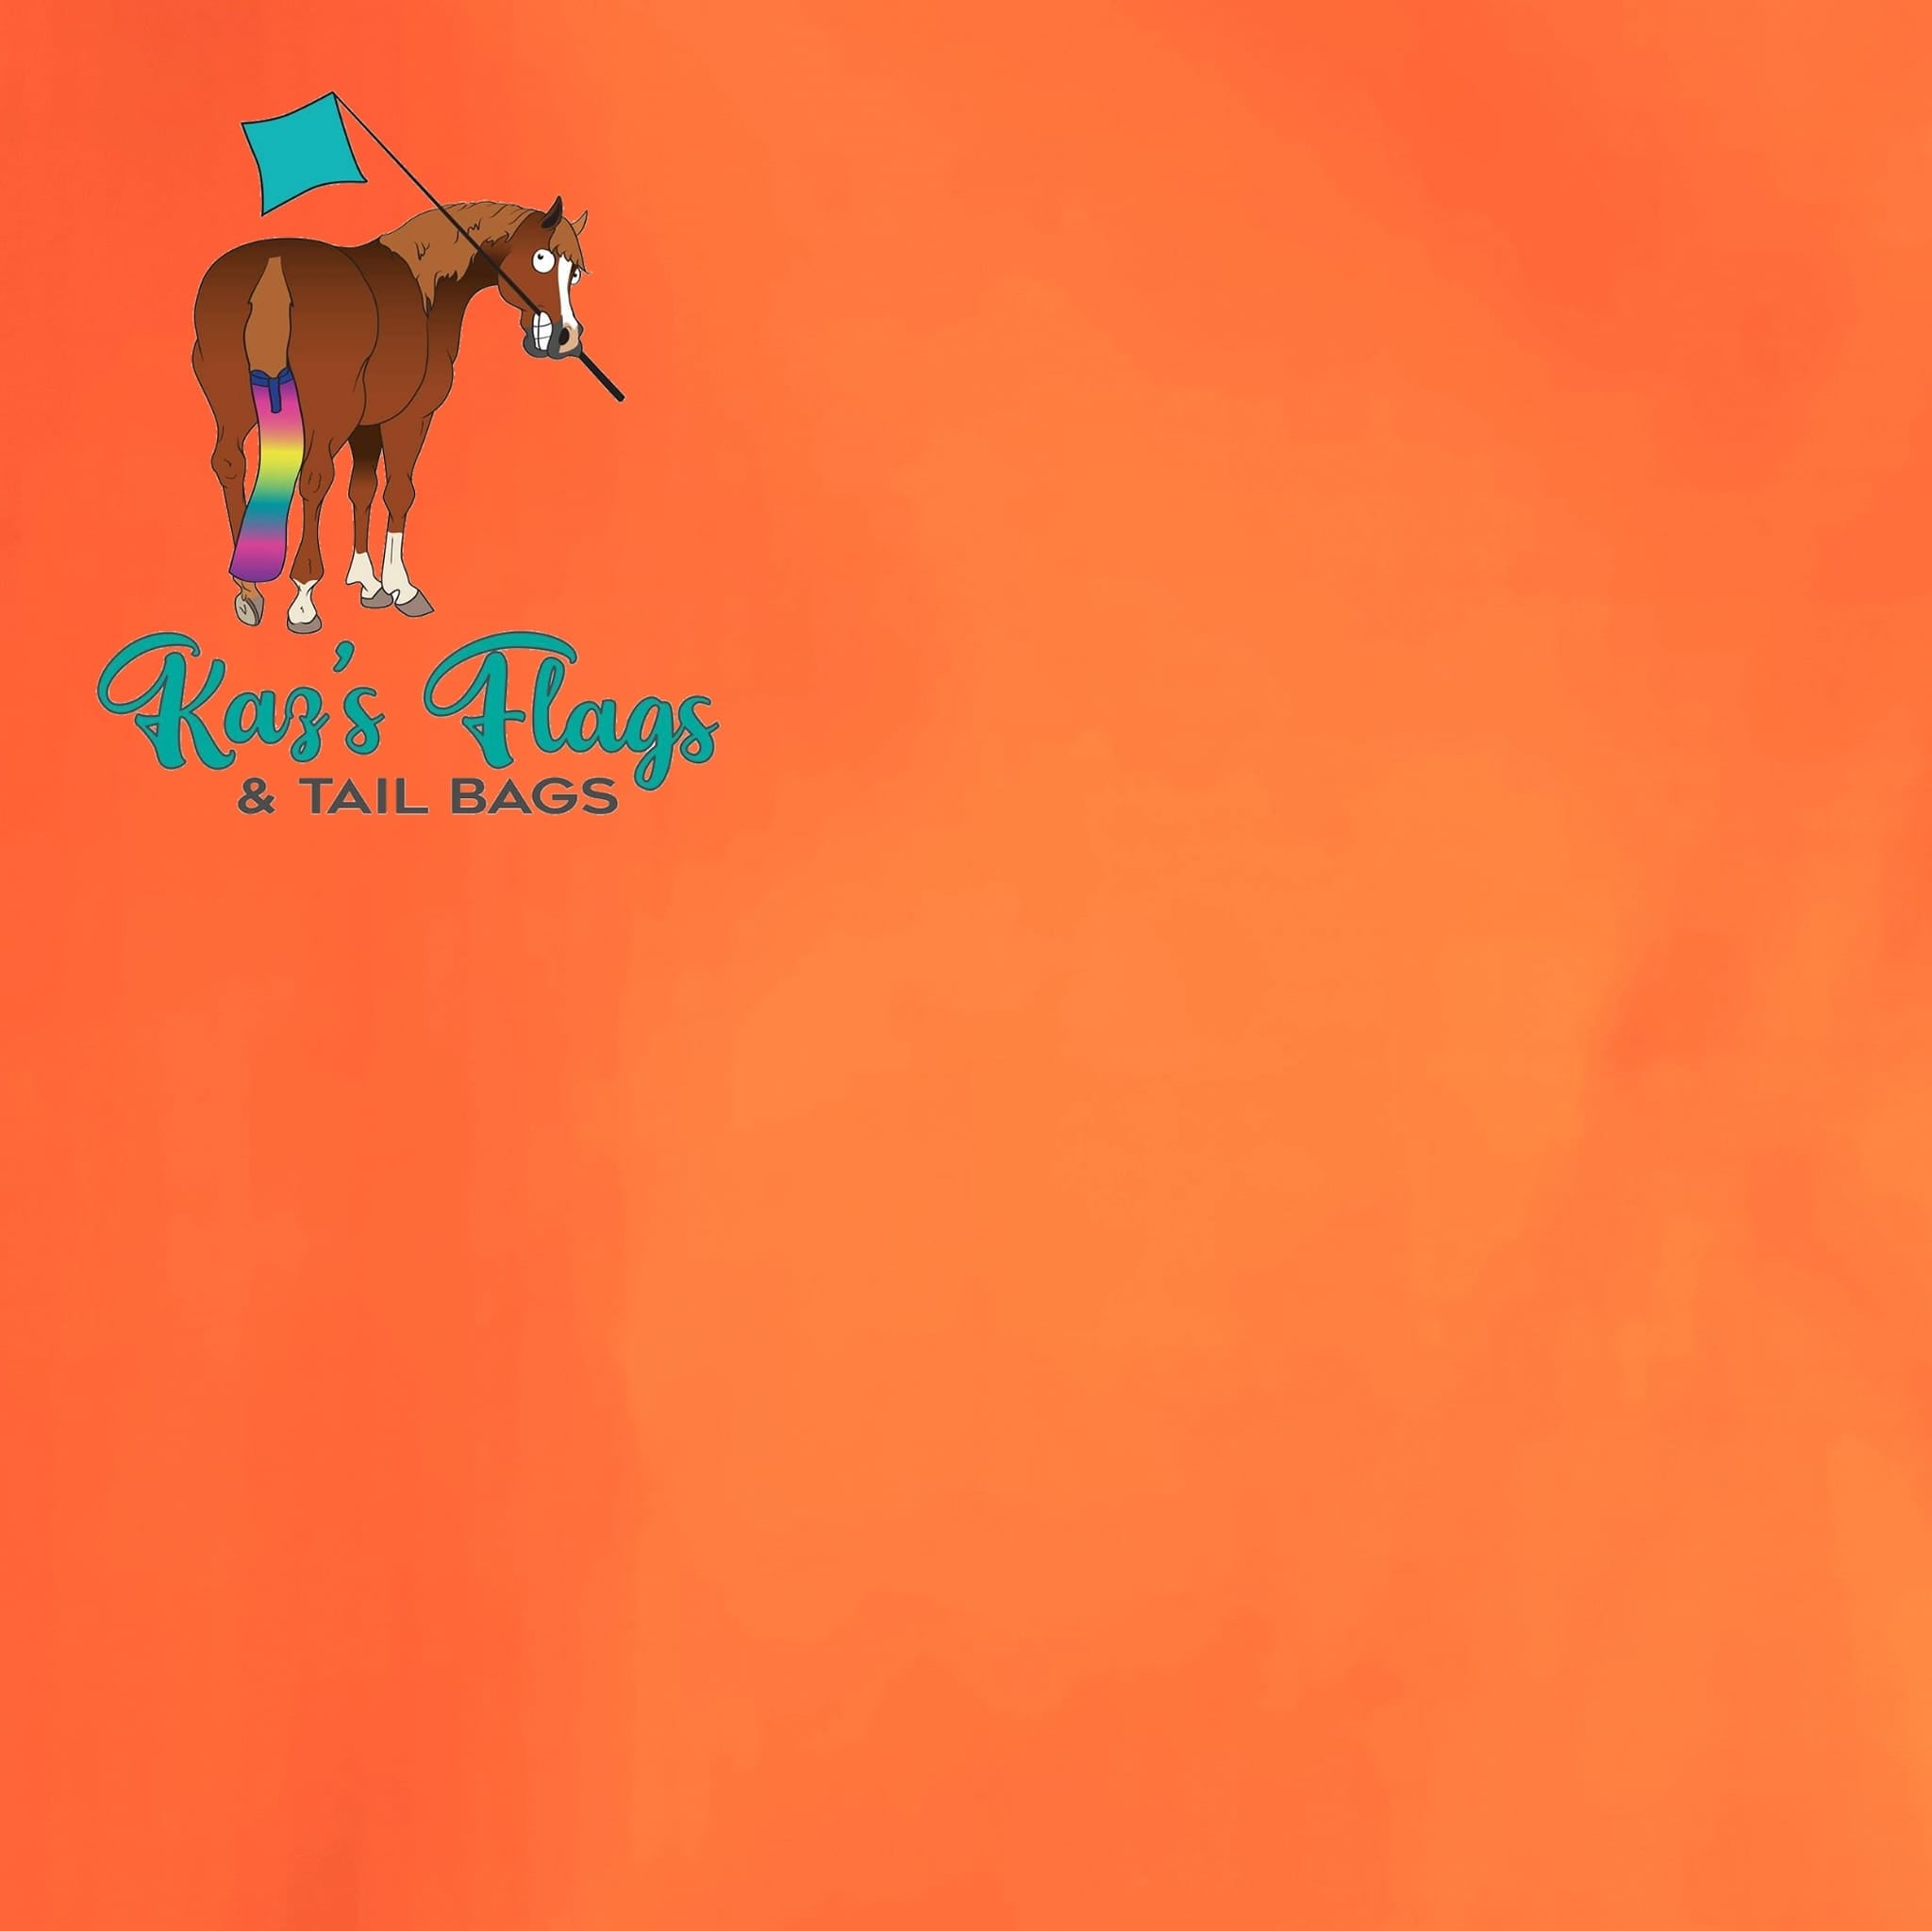 Horse Tail Bag STANDARD - Rug Less